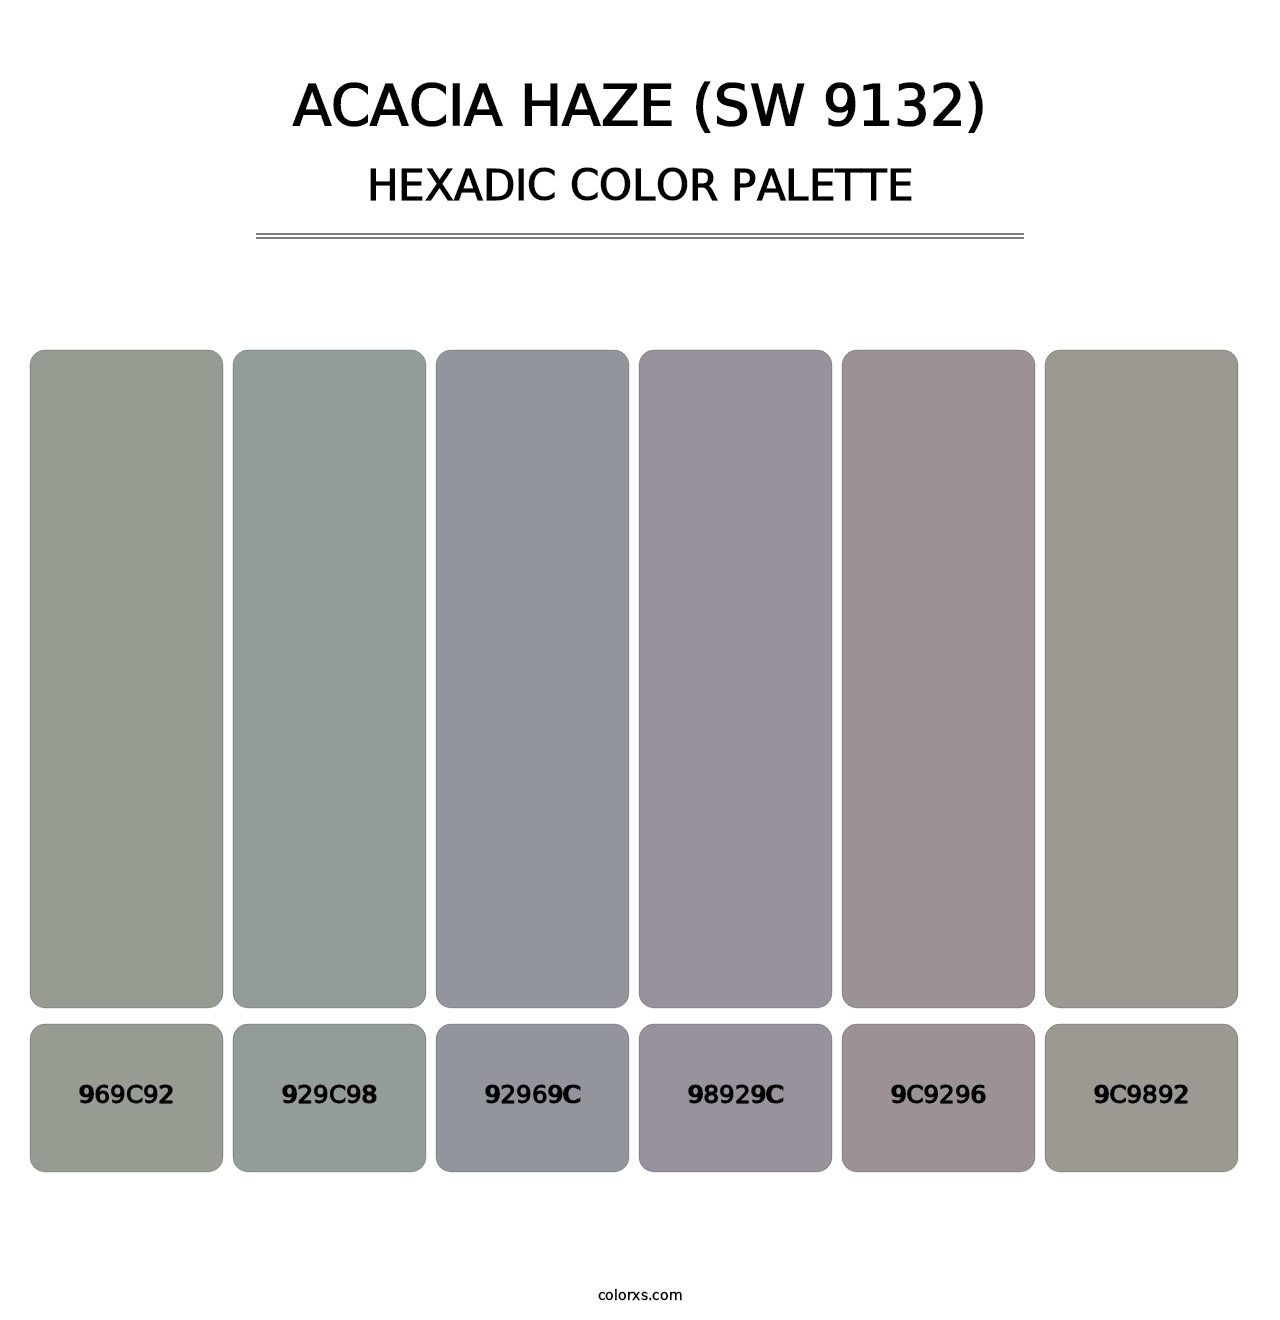 Acacia Haze (SW 9132) - Hexadic Color Palette